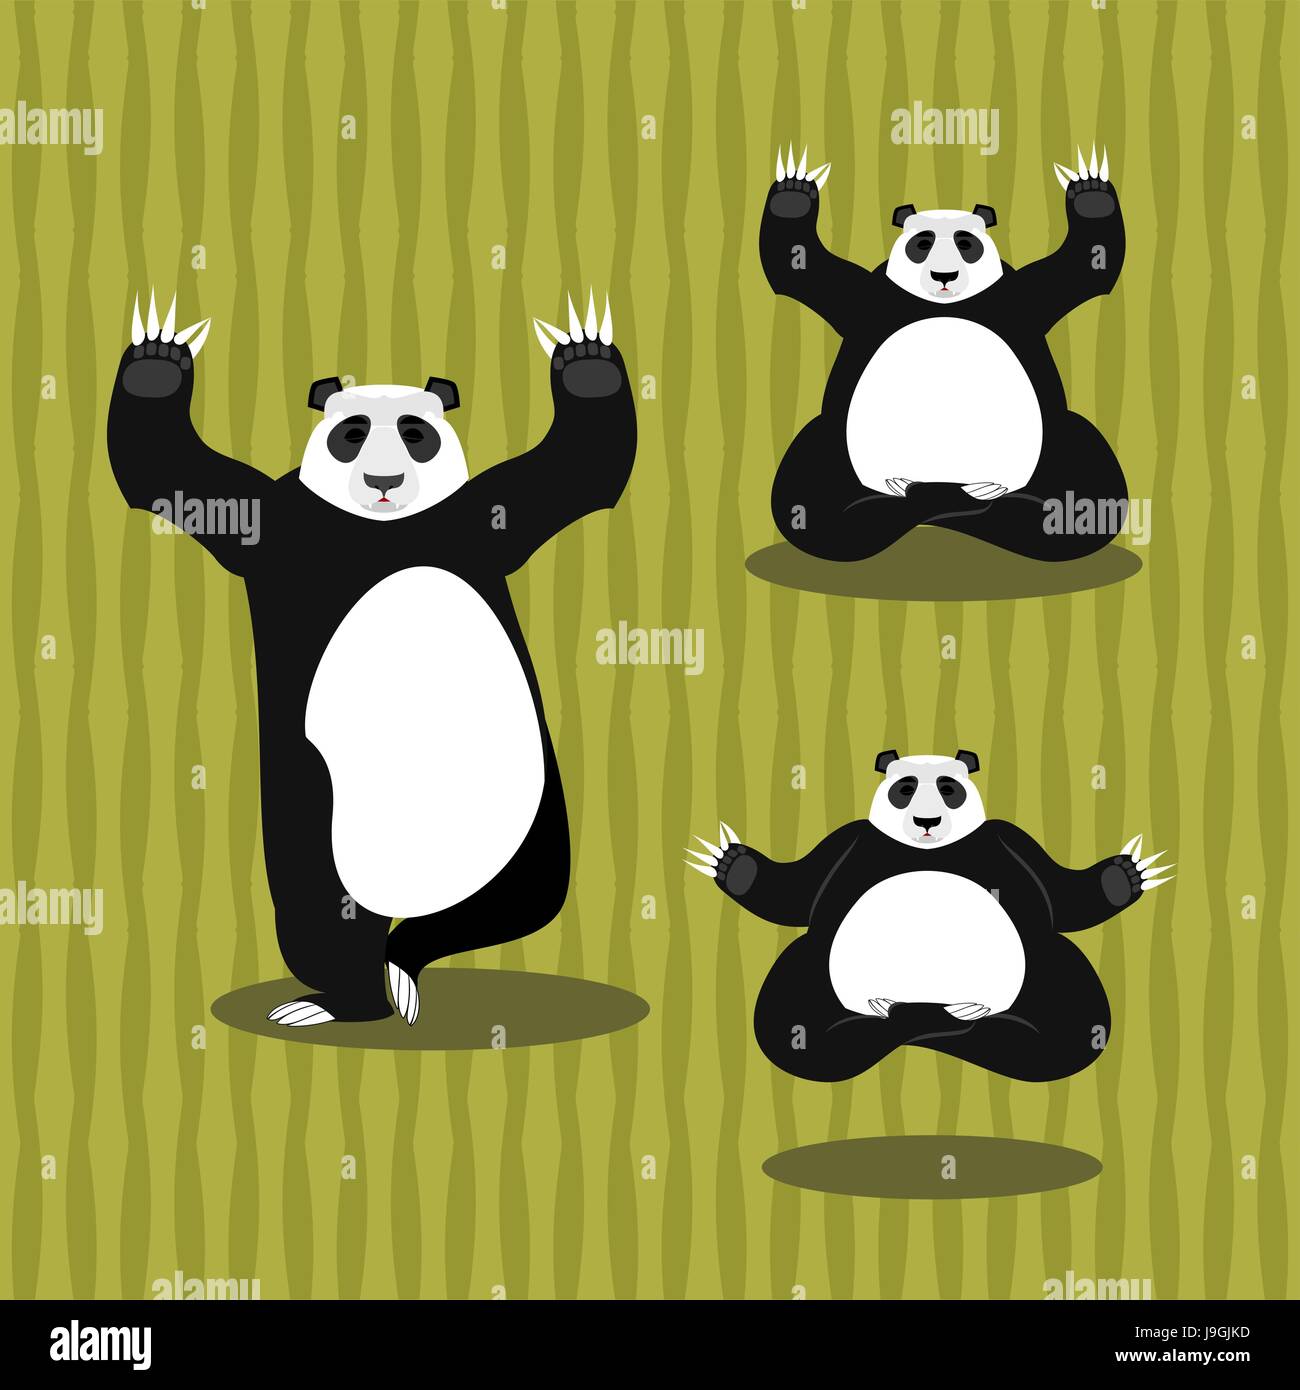 https://c8.alamy.com/comp/J9GJKD/panda-yoga-meditating-chinese-bear-on-background-of-bamboo-status-J9GJKD.jpg